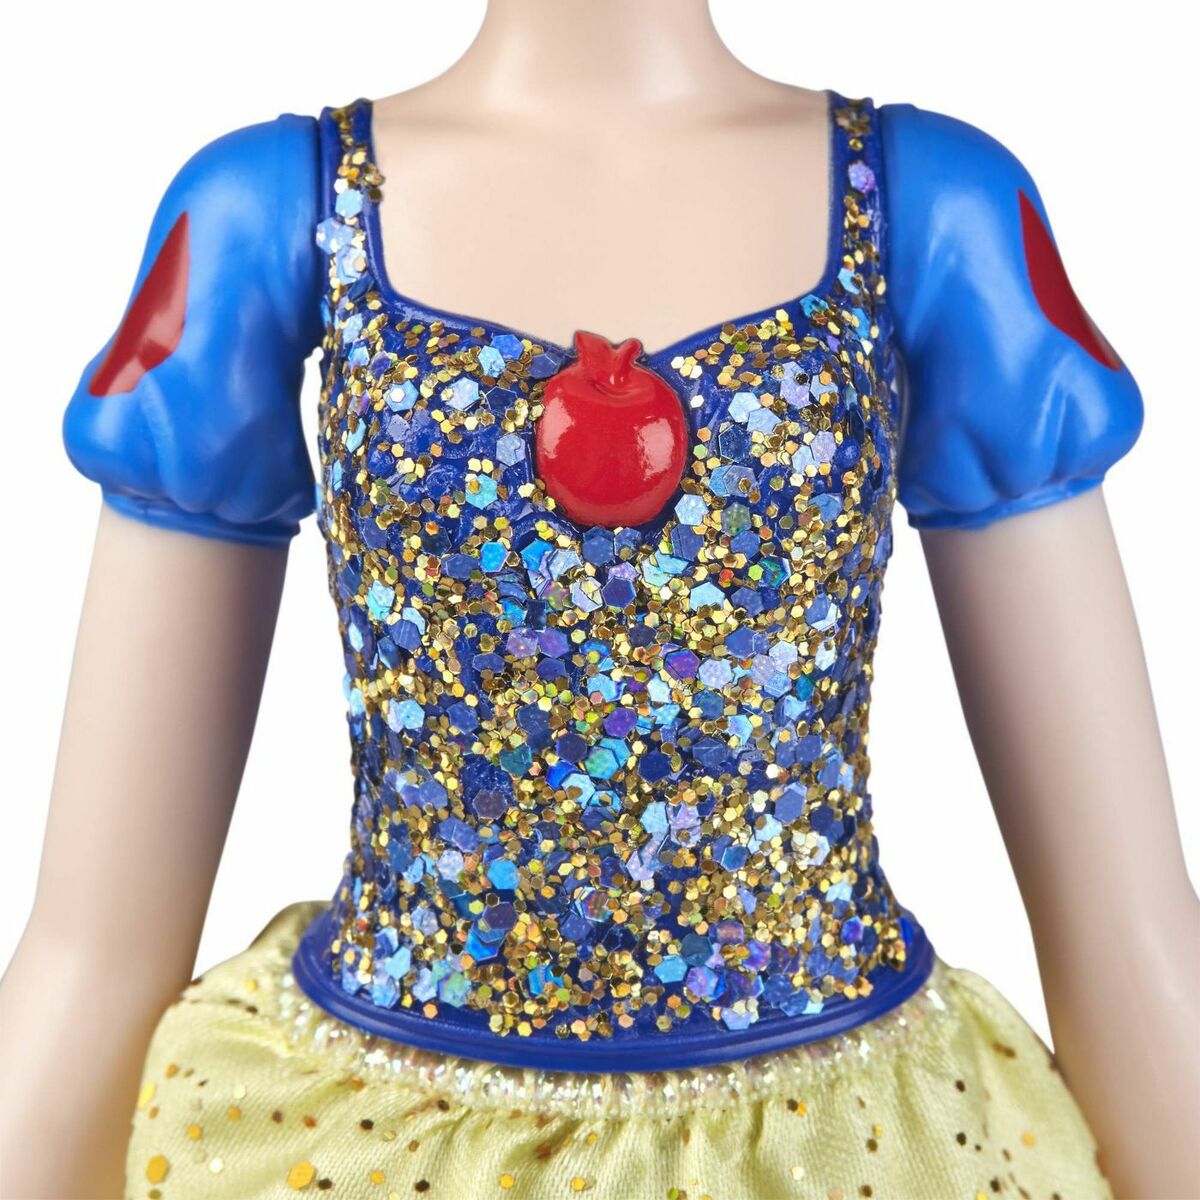 Disney Prinsessa Royal Shimmer Snow White Lumikki